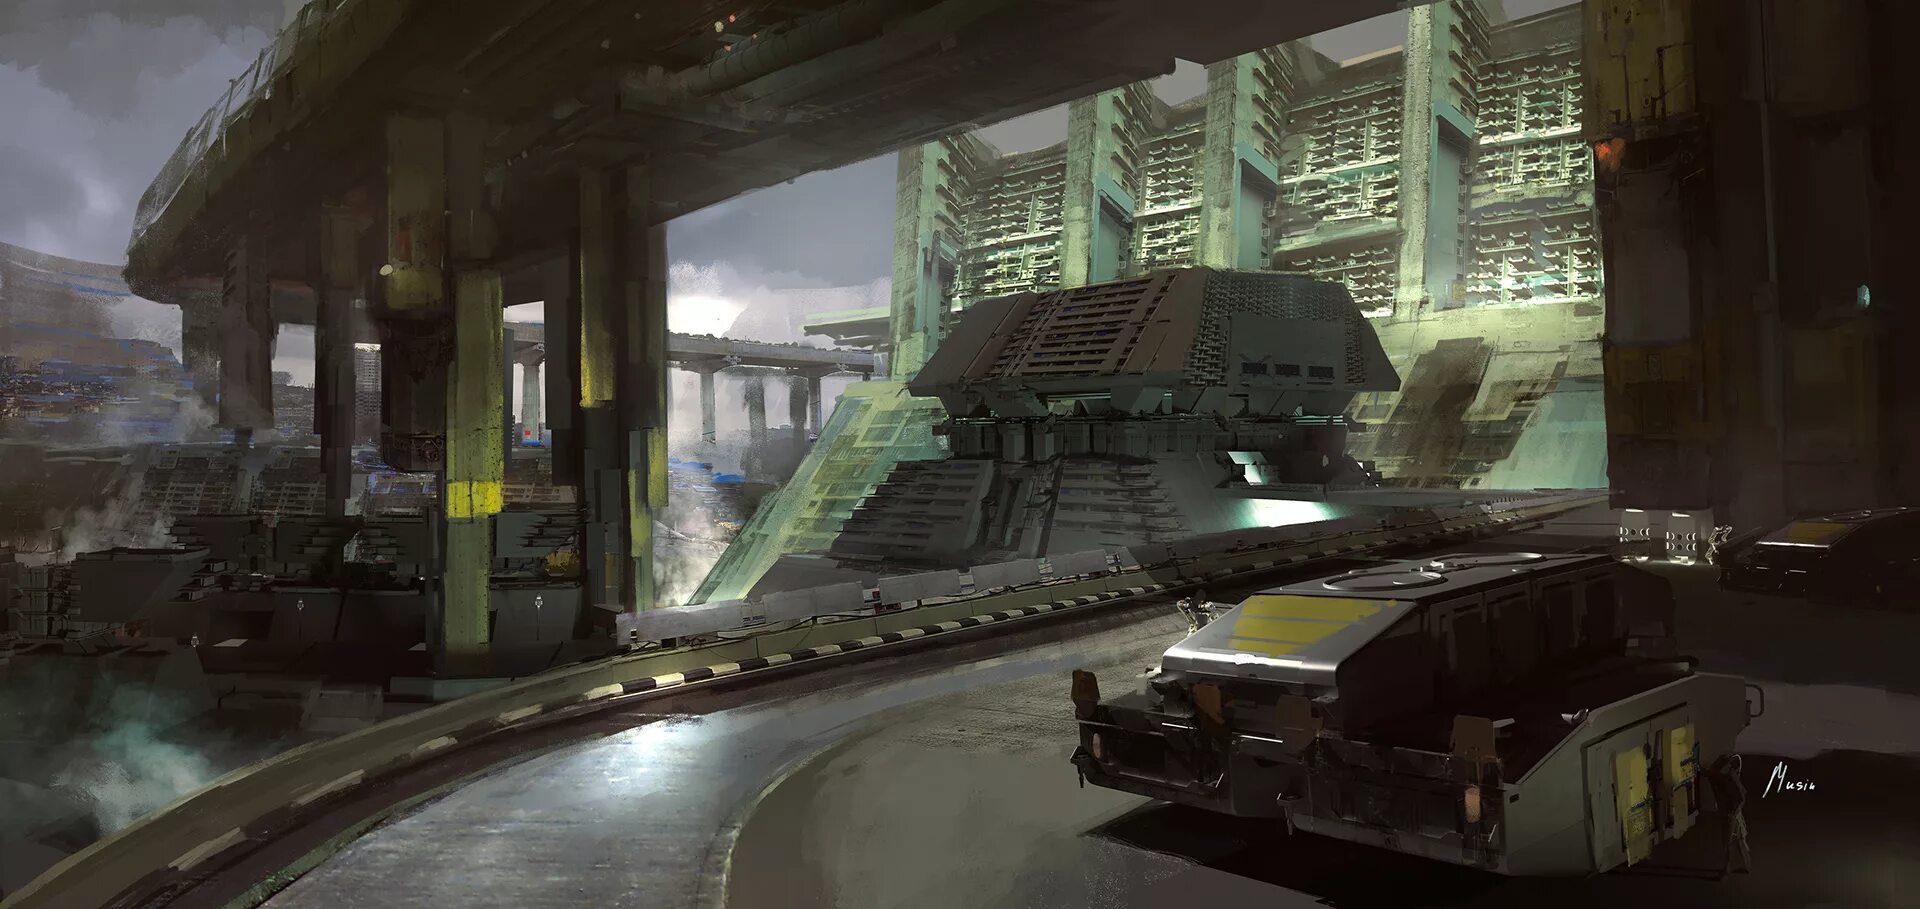 Robot city. Halo environment Concept Art. The name of the City of Robots. A 112 Robot City.